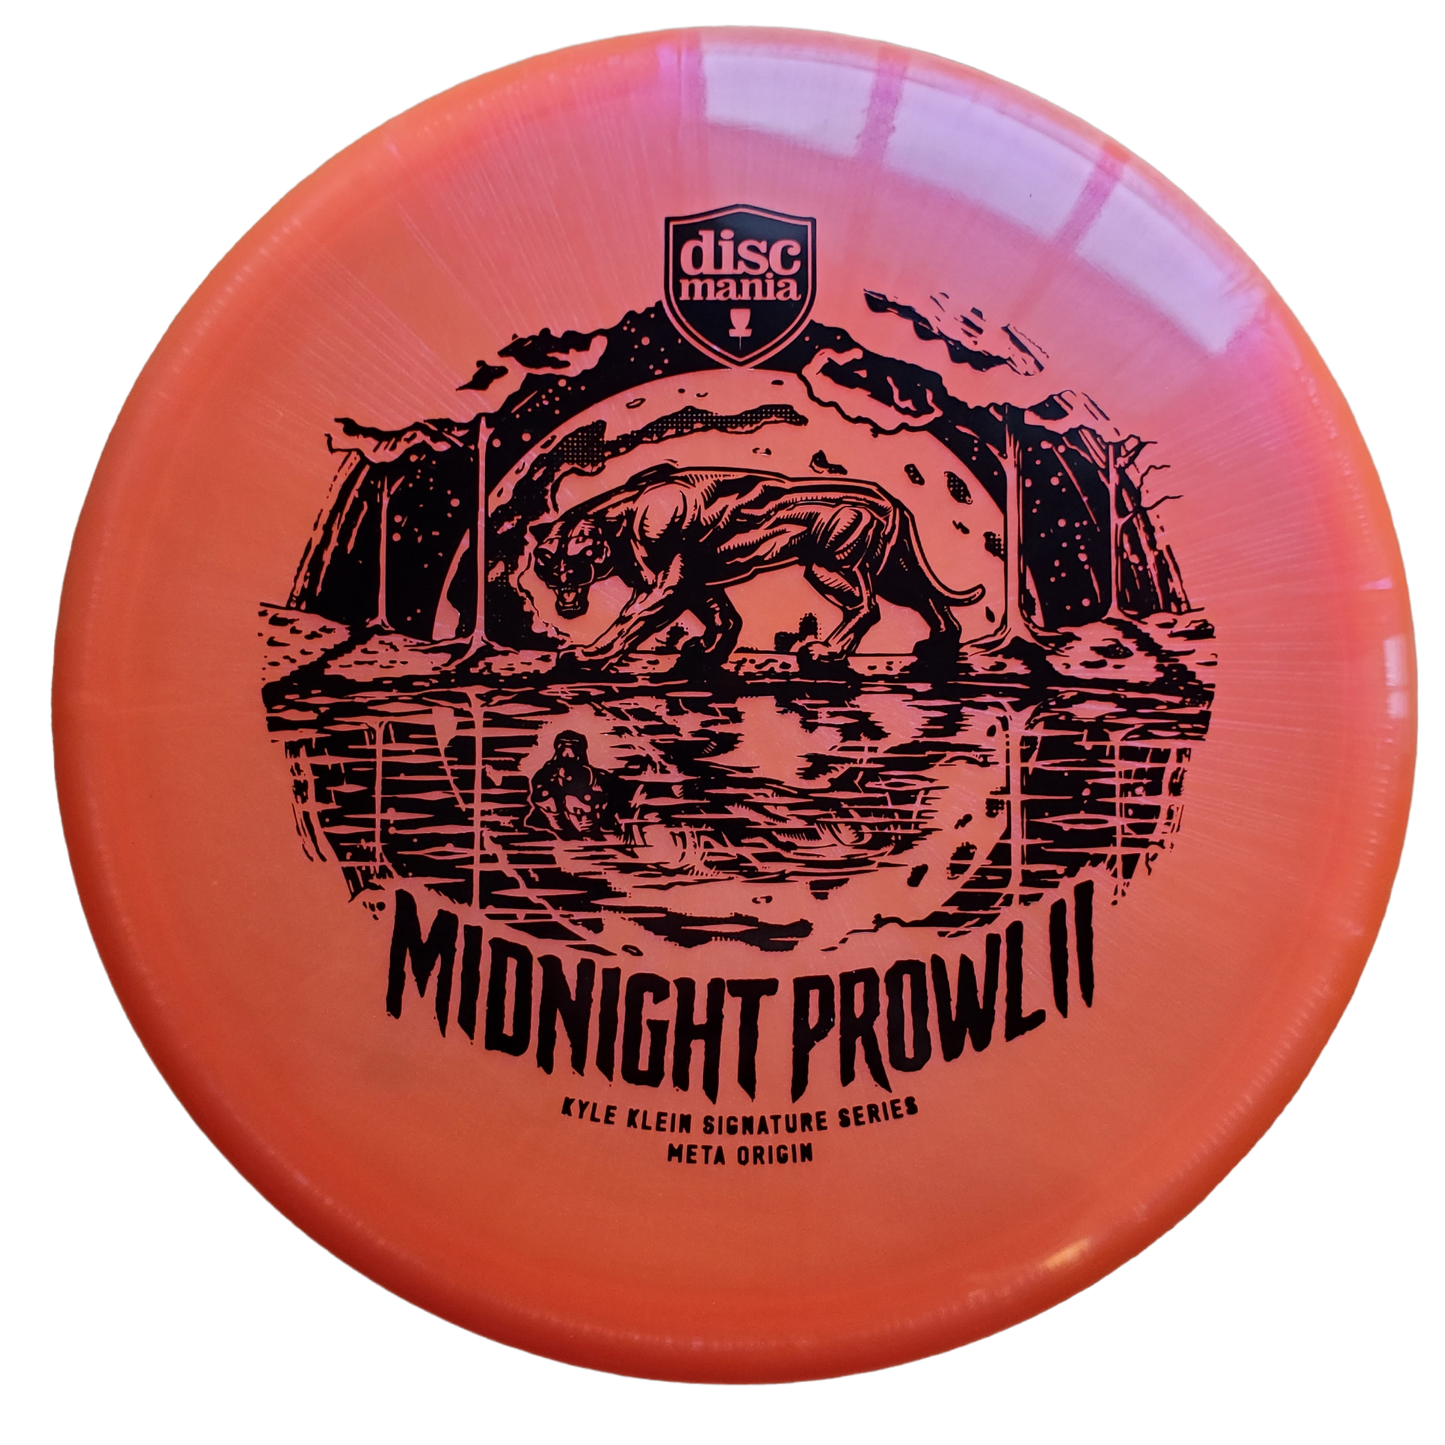 Discmania Midnight Prowl II (Kyle Klein Meta Origin)